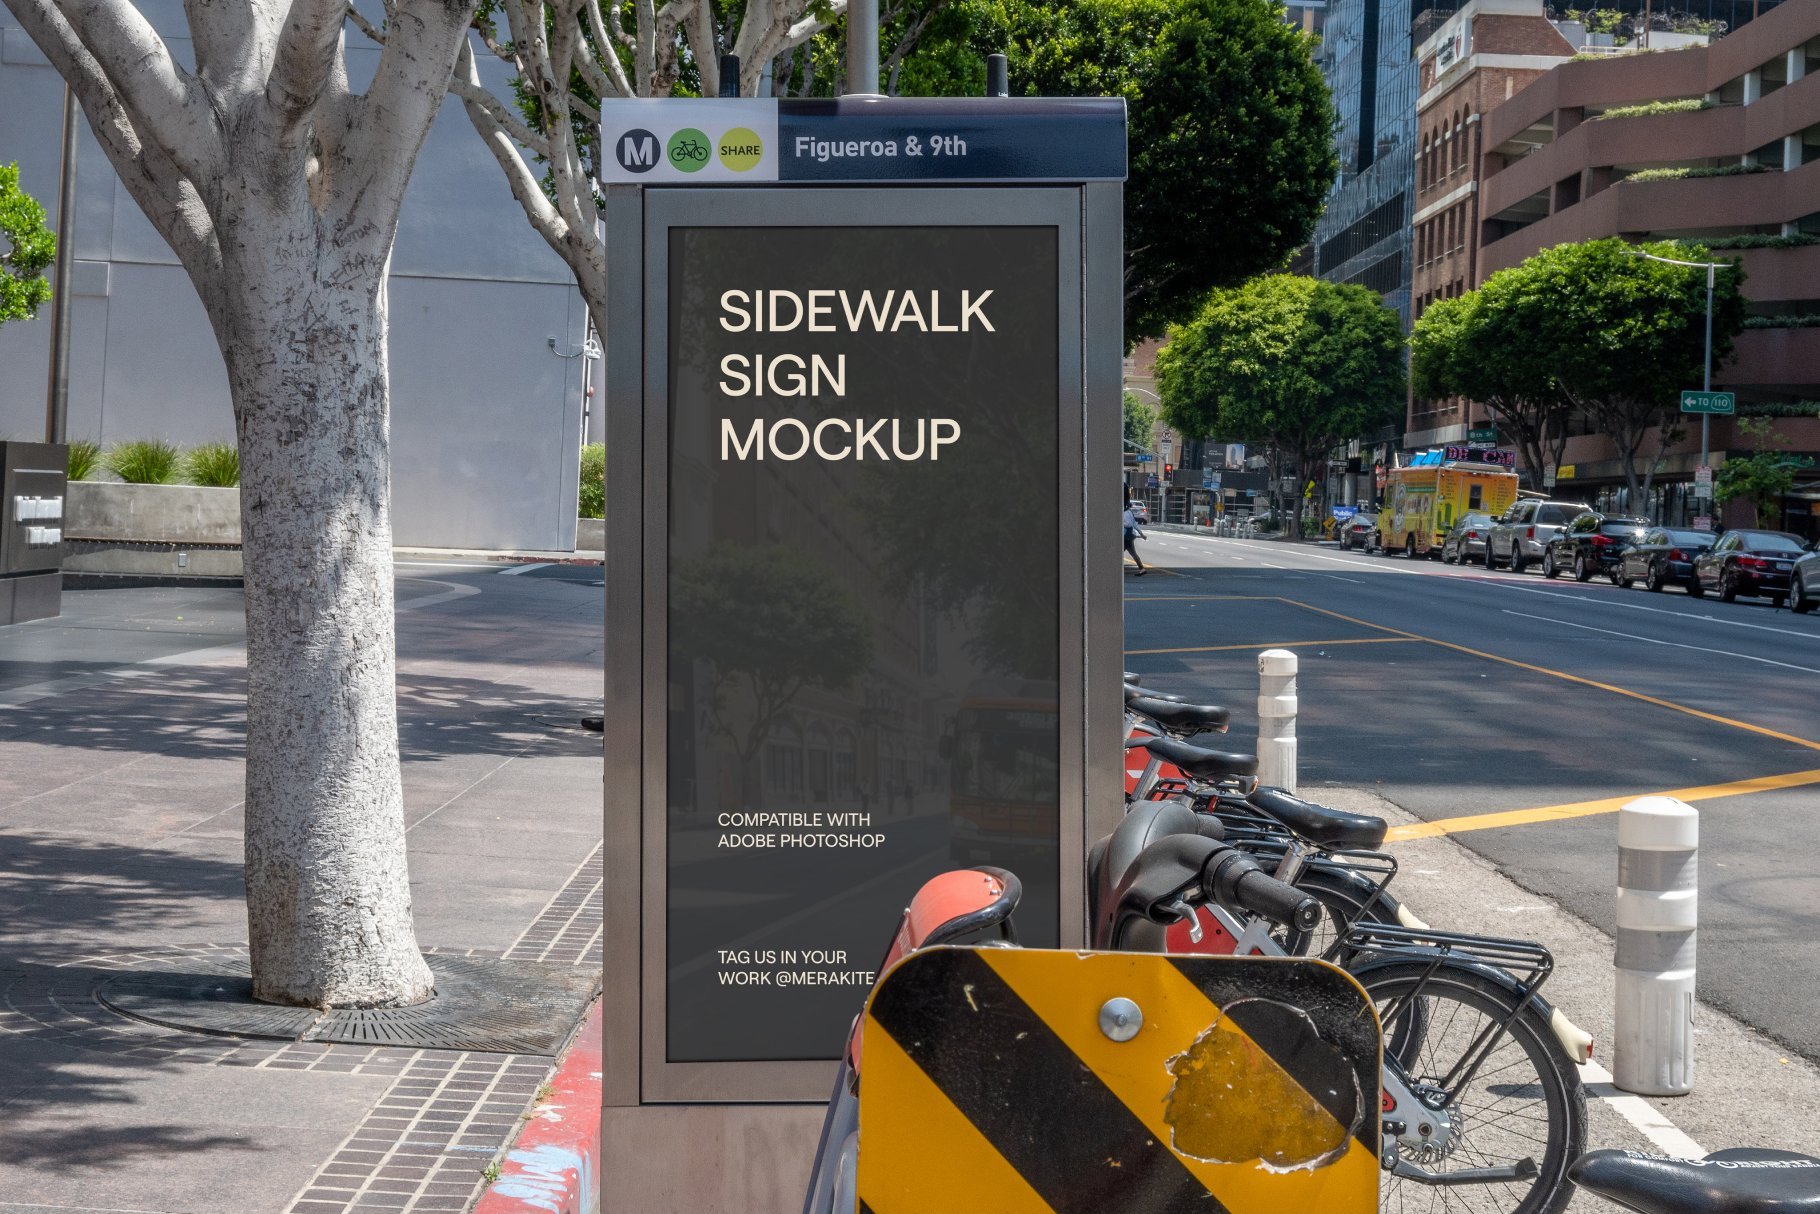 Urban Sidewalk Sign Mockup PSD cover image.